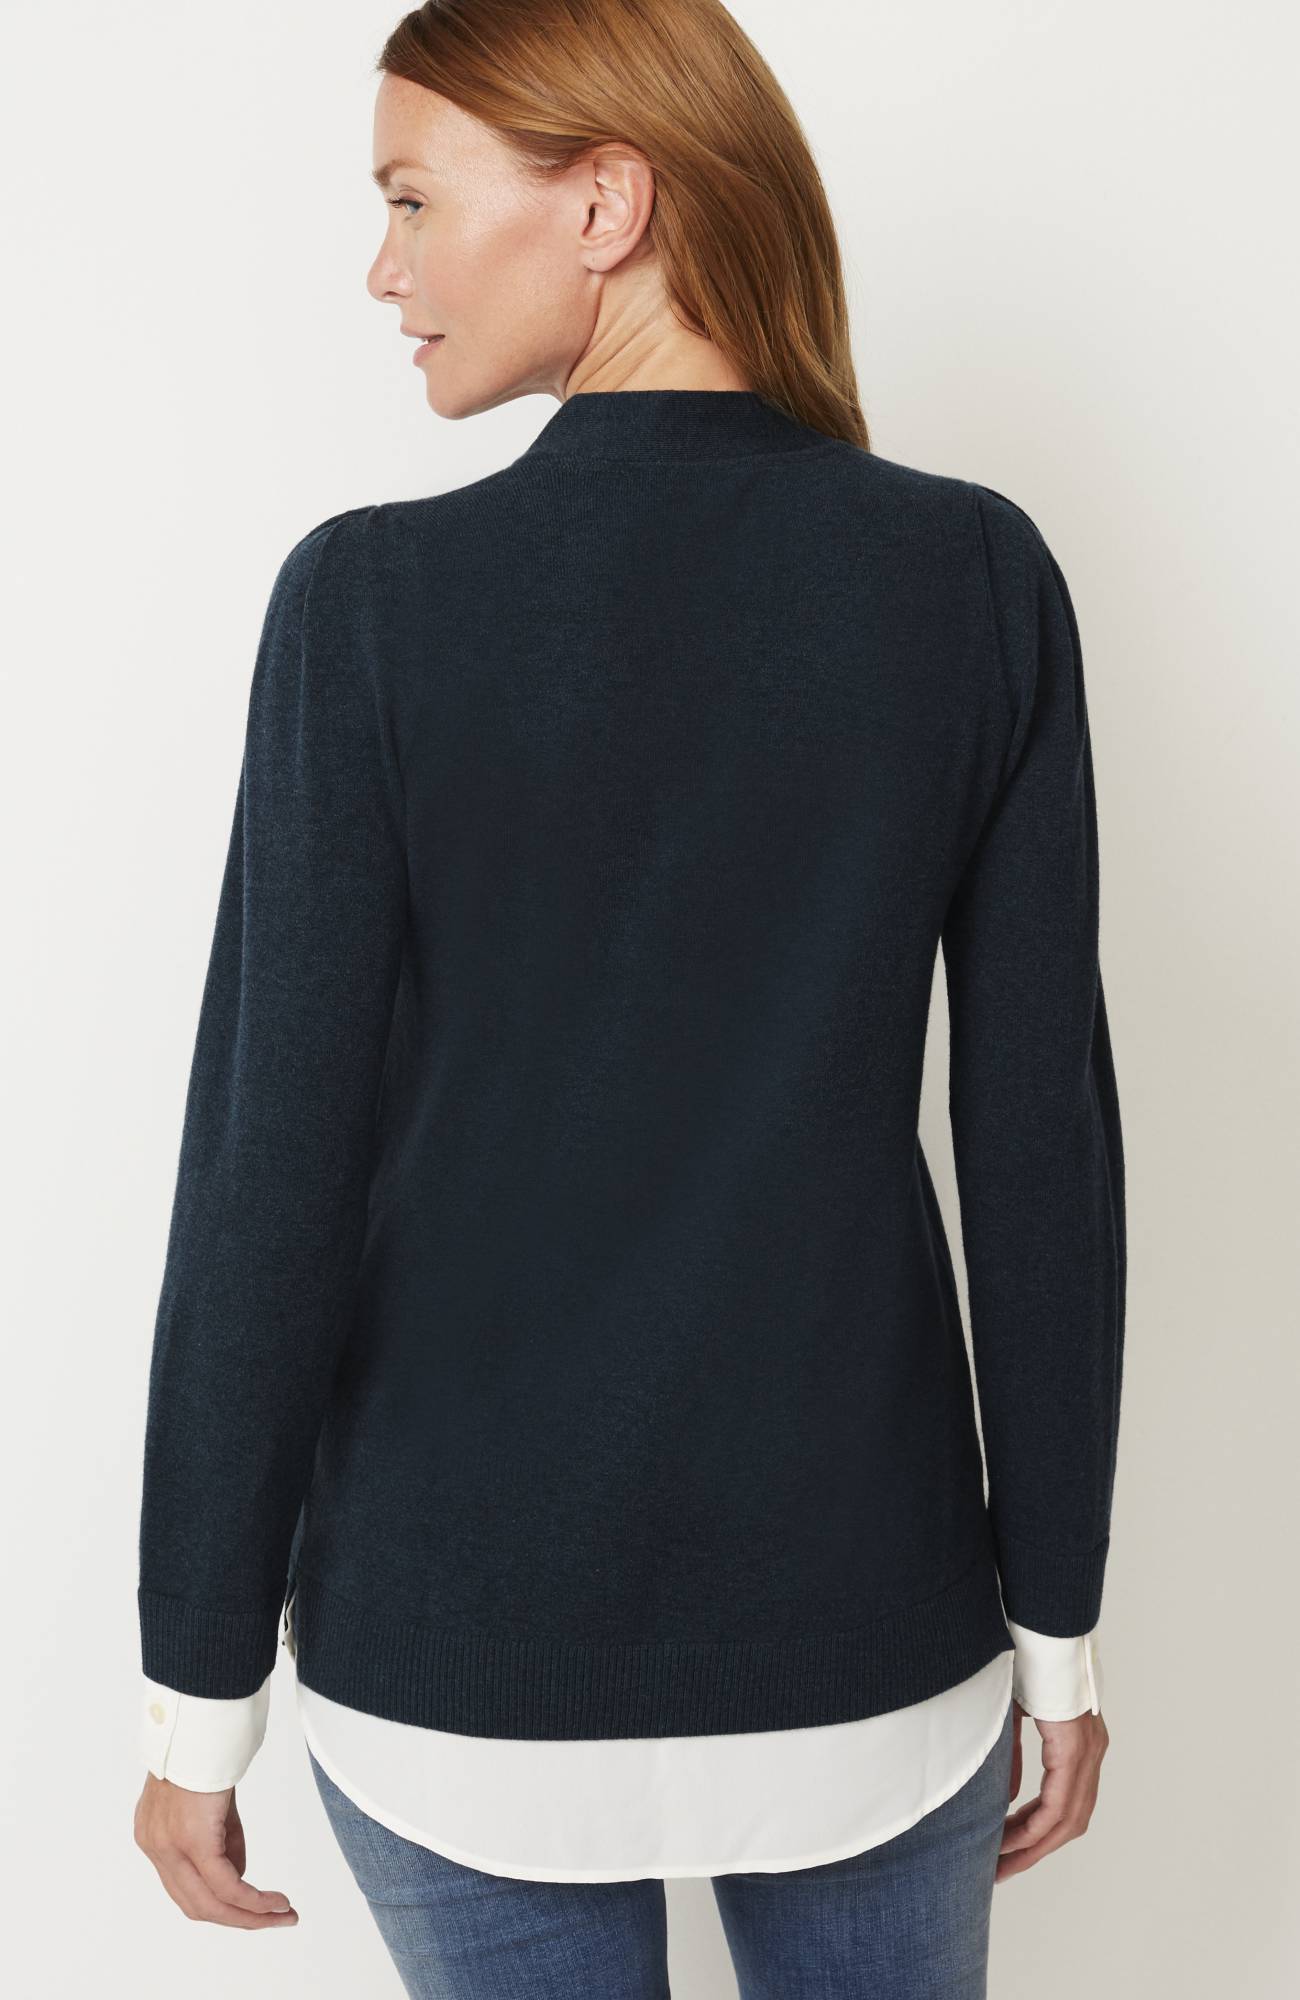 Mixed-Media Layered Sweater